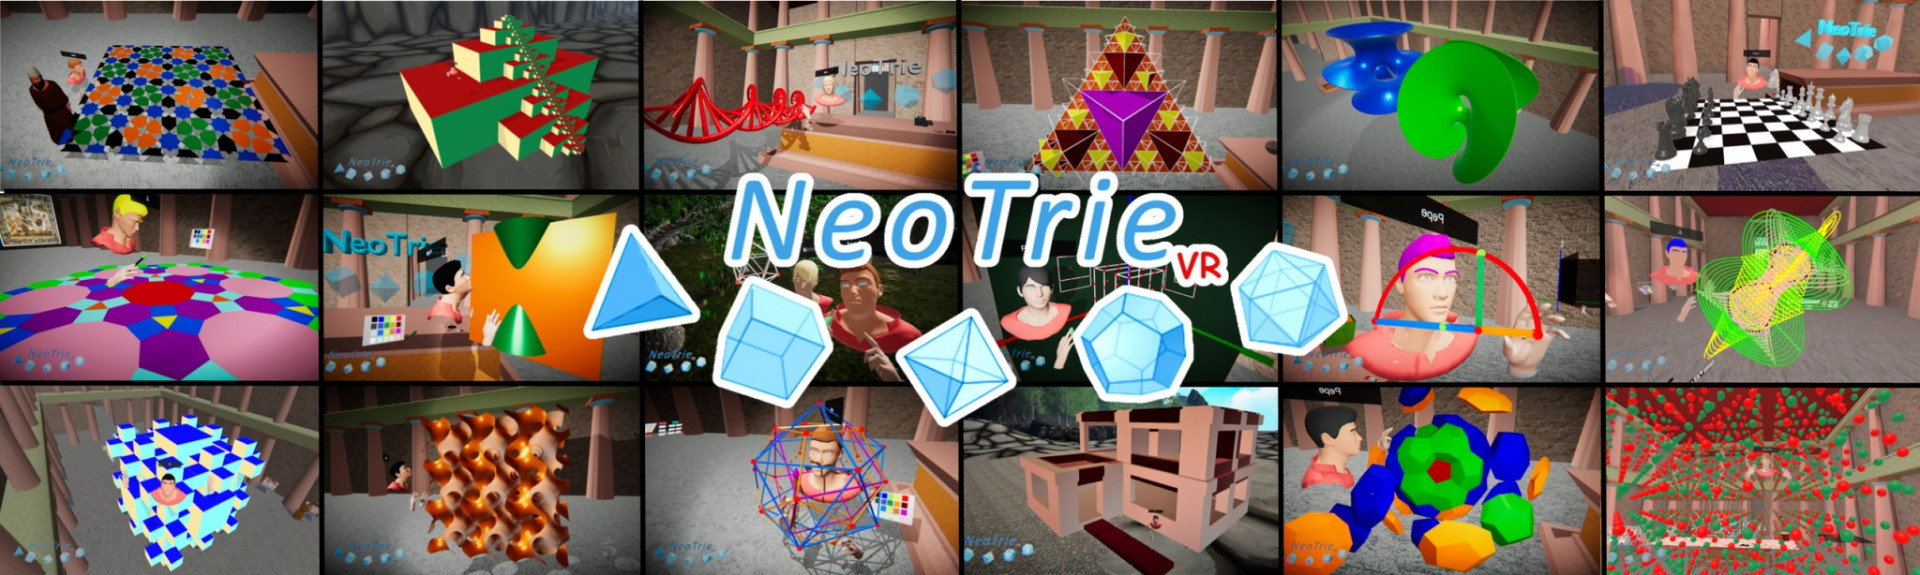 Neotrie VR